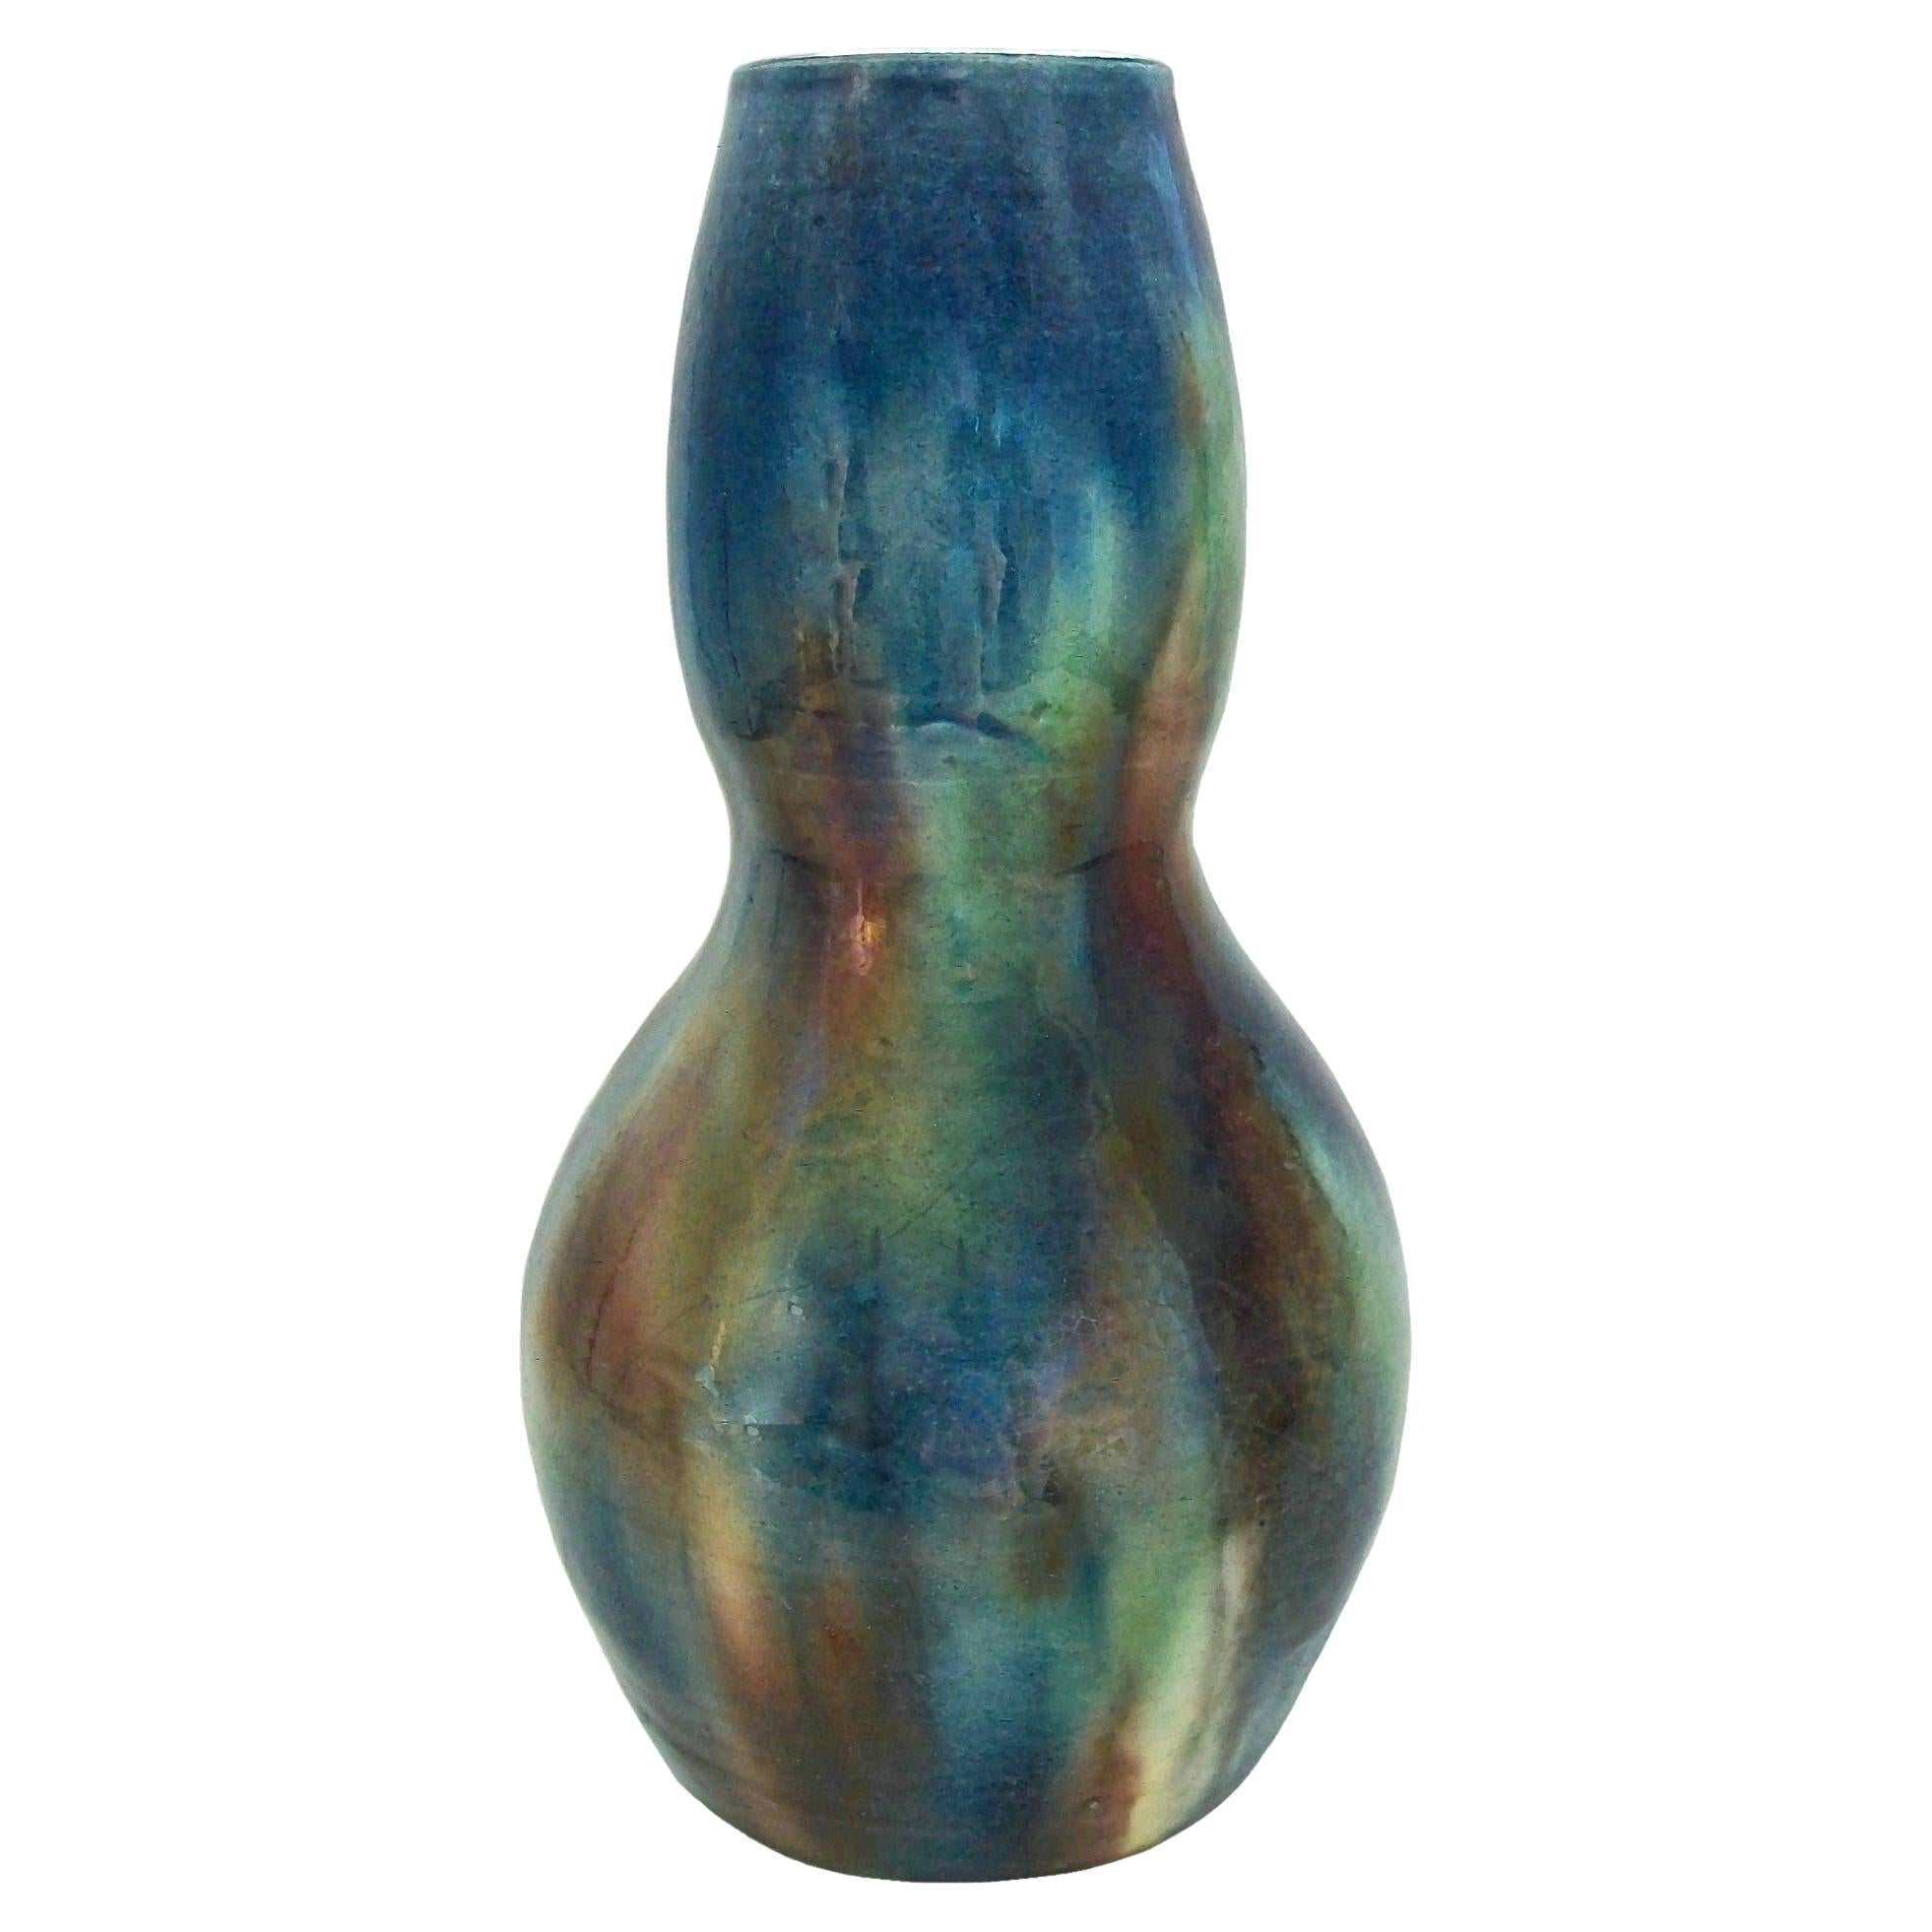 Art Nouveau Double Gourd Ceramic Vase - Iridescent Glaze - Belgium - 20th C.